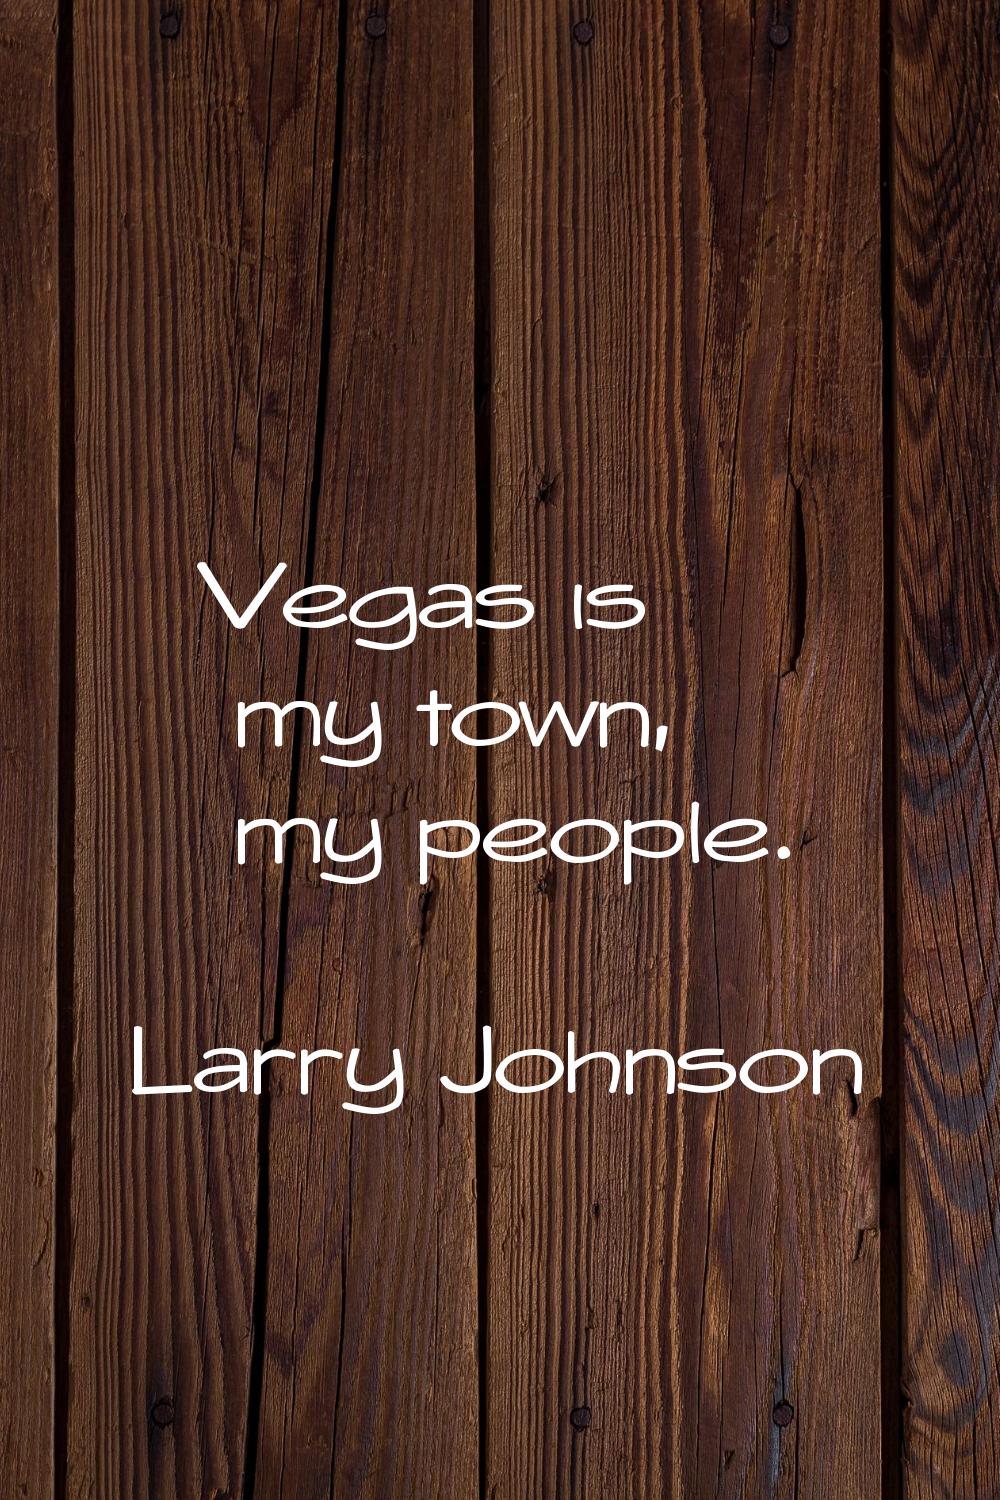 Vegas is my town, my people.